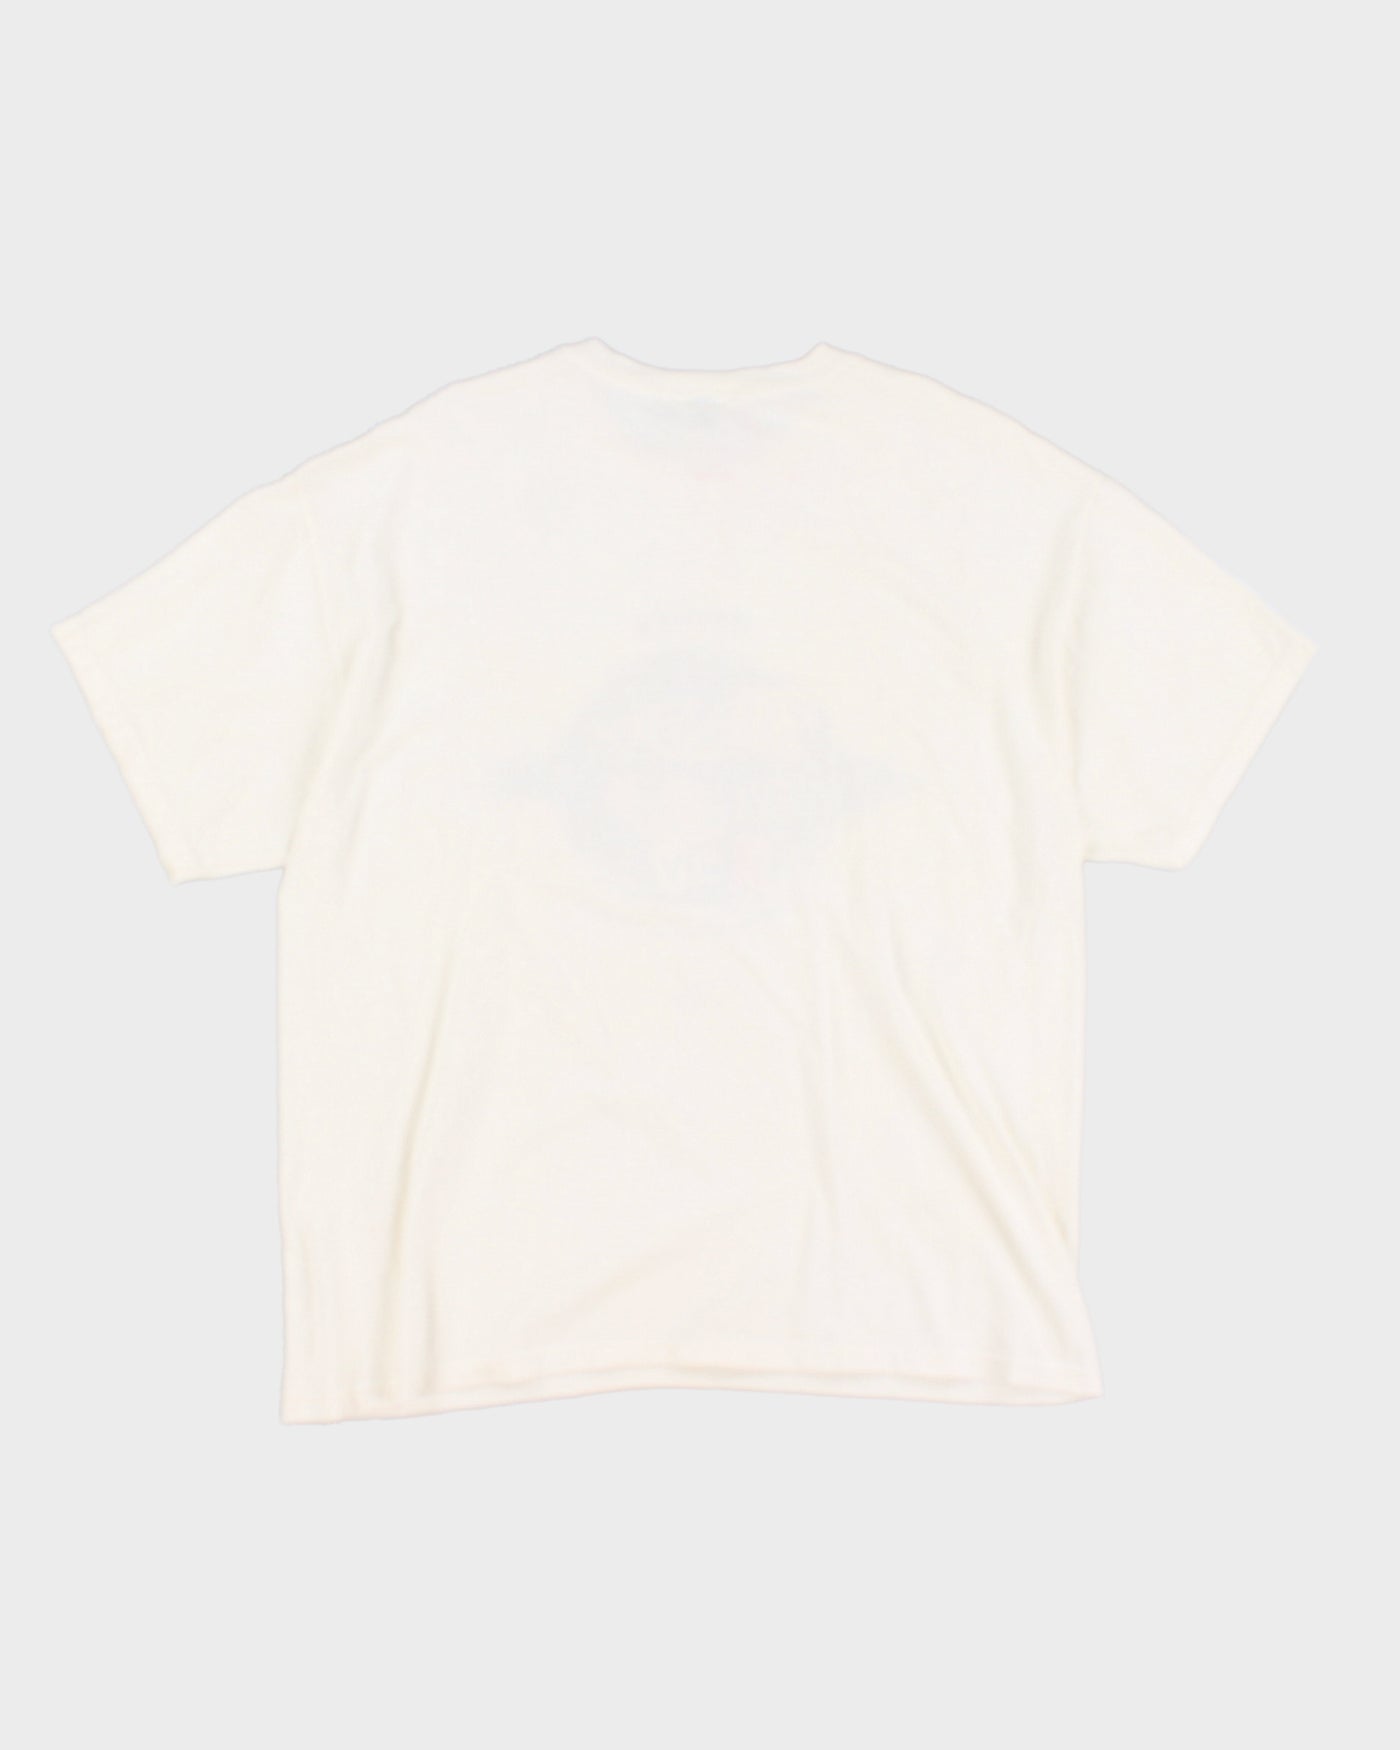 00s Disney Graphic T-Shirt - XL